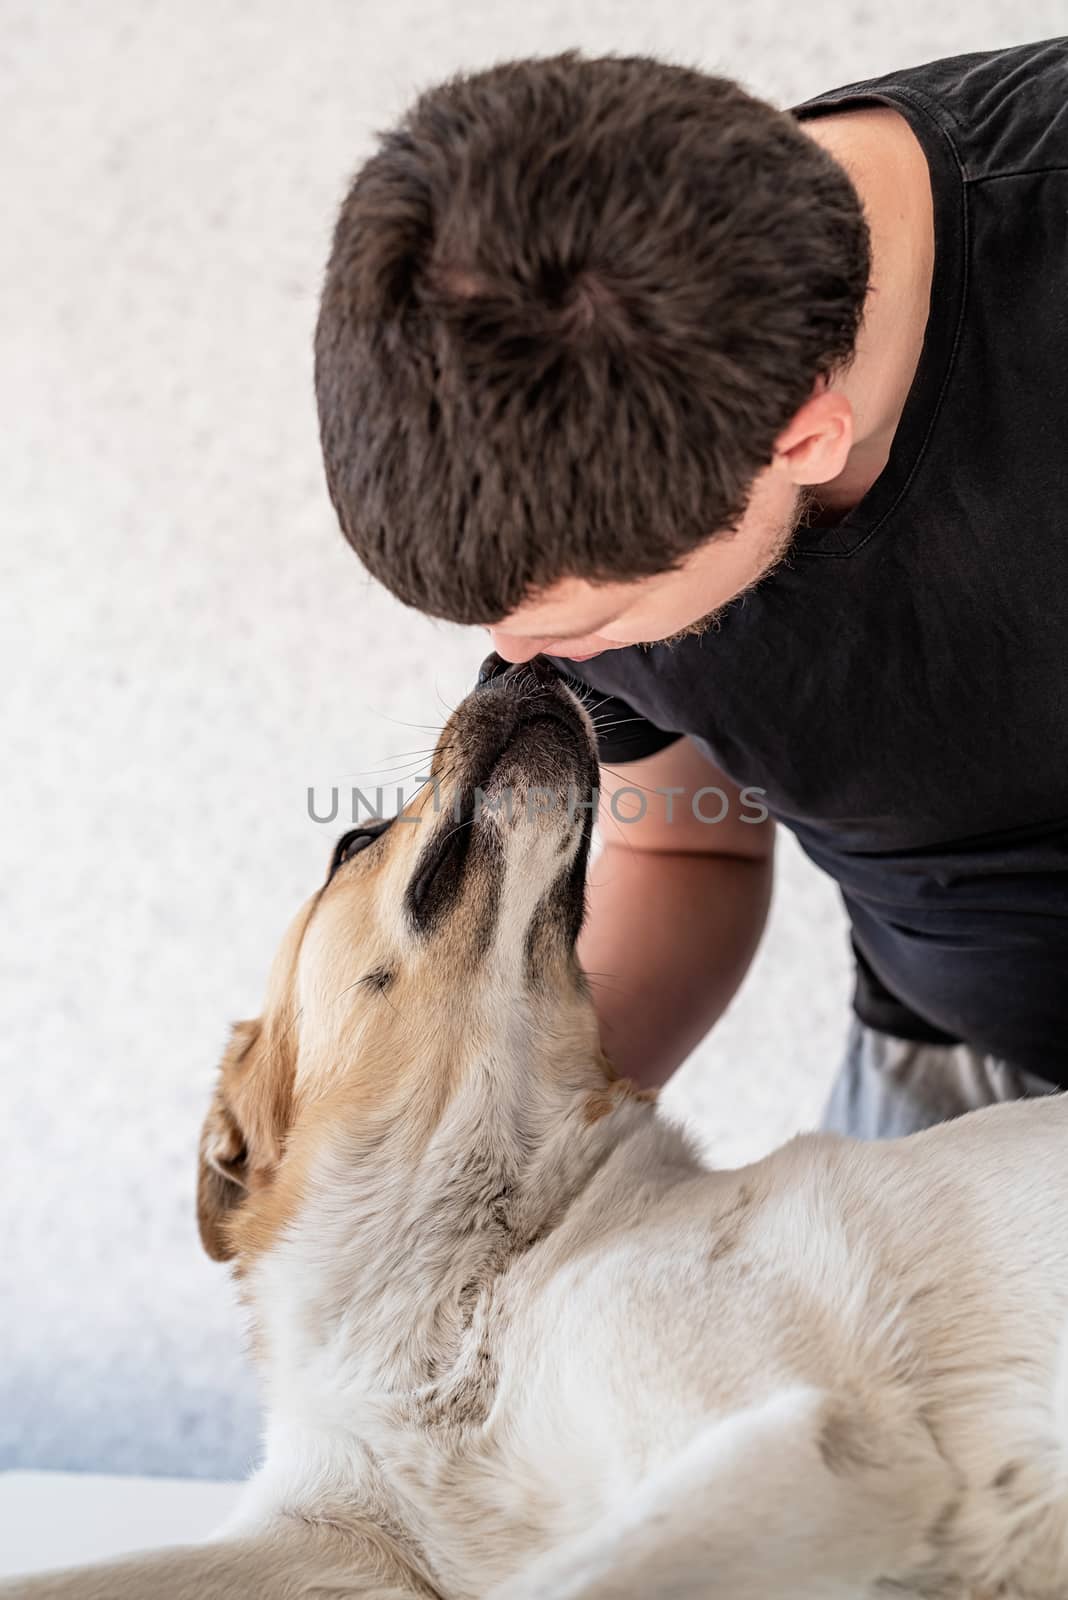 Man kissing his shepherd dog by Desperada